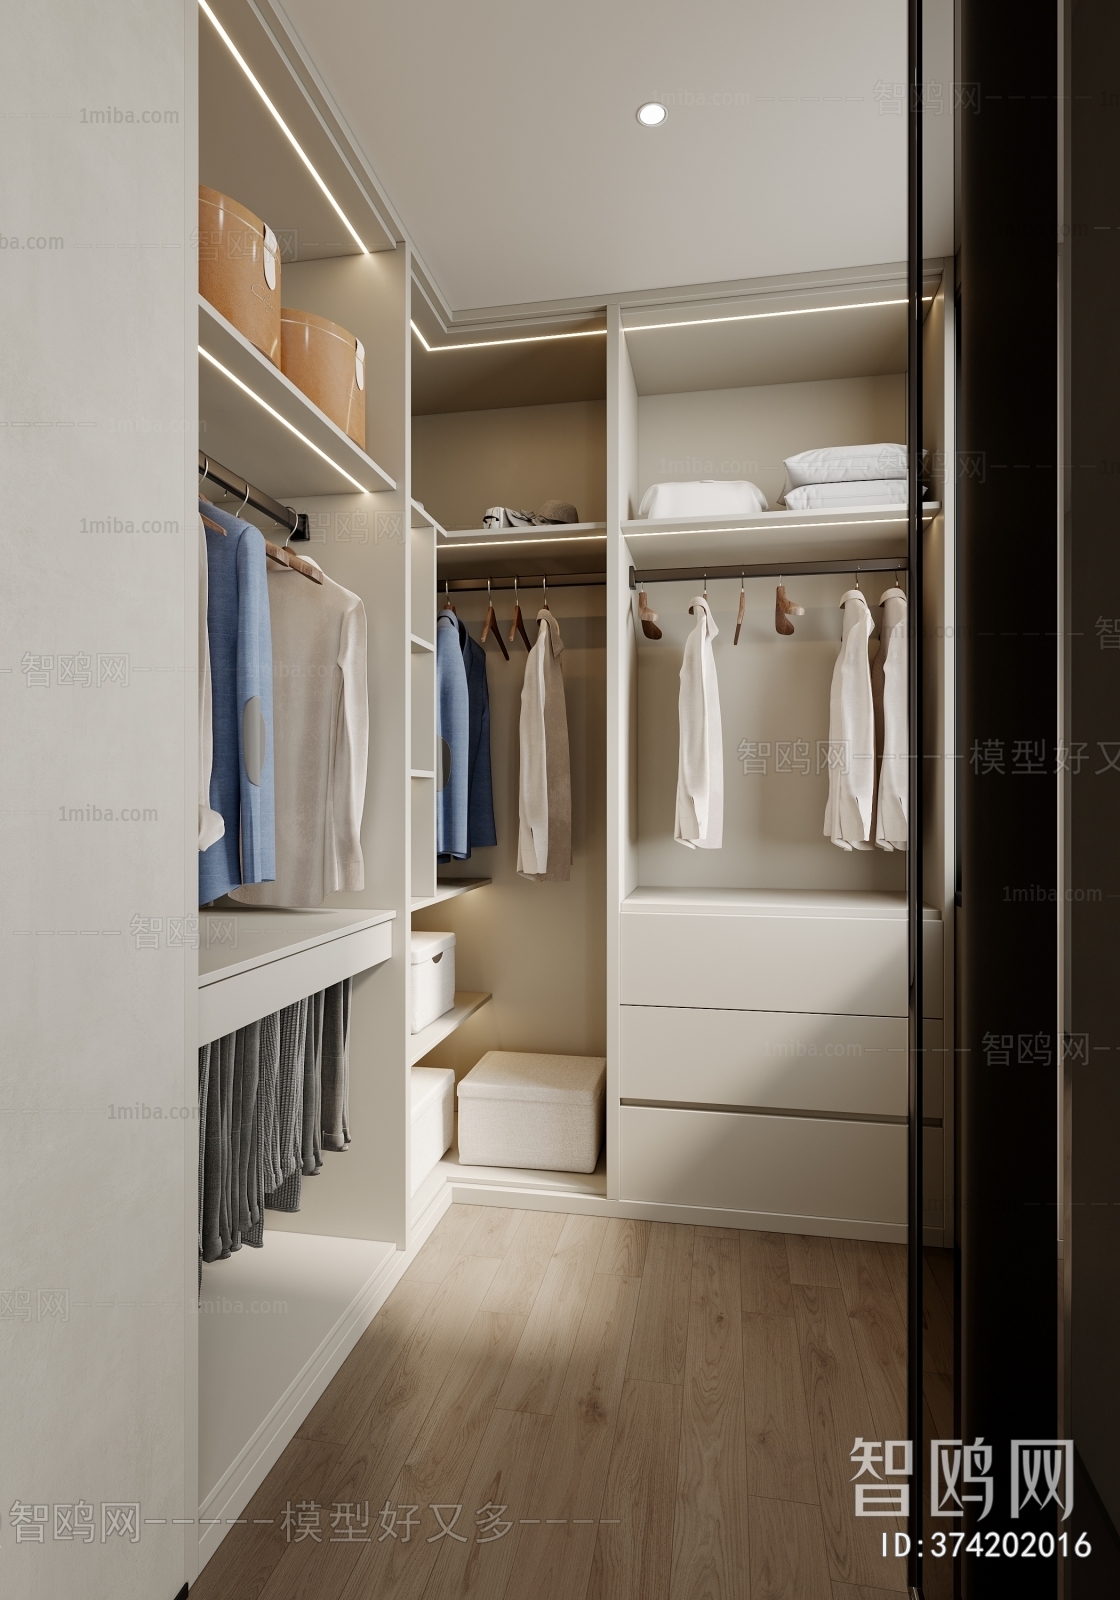 Modern Clothes Storage Area